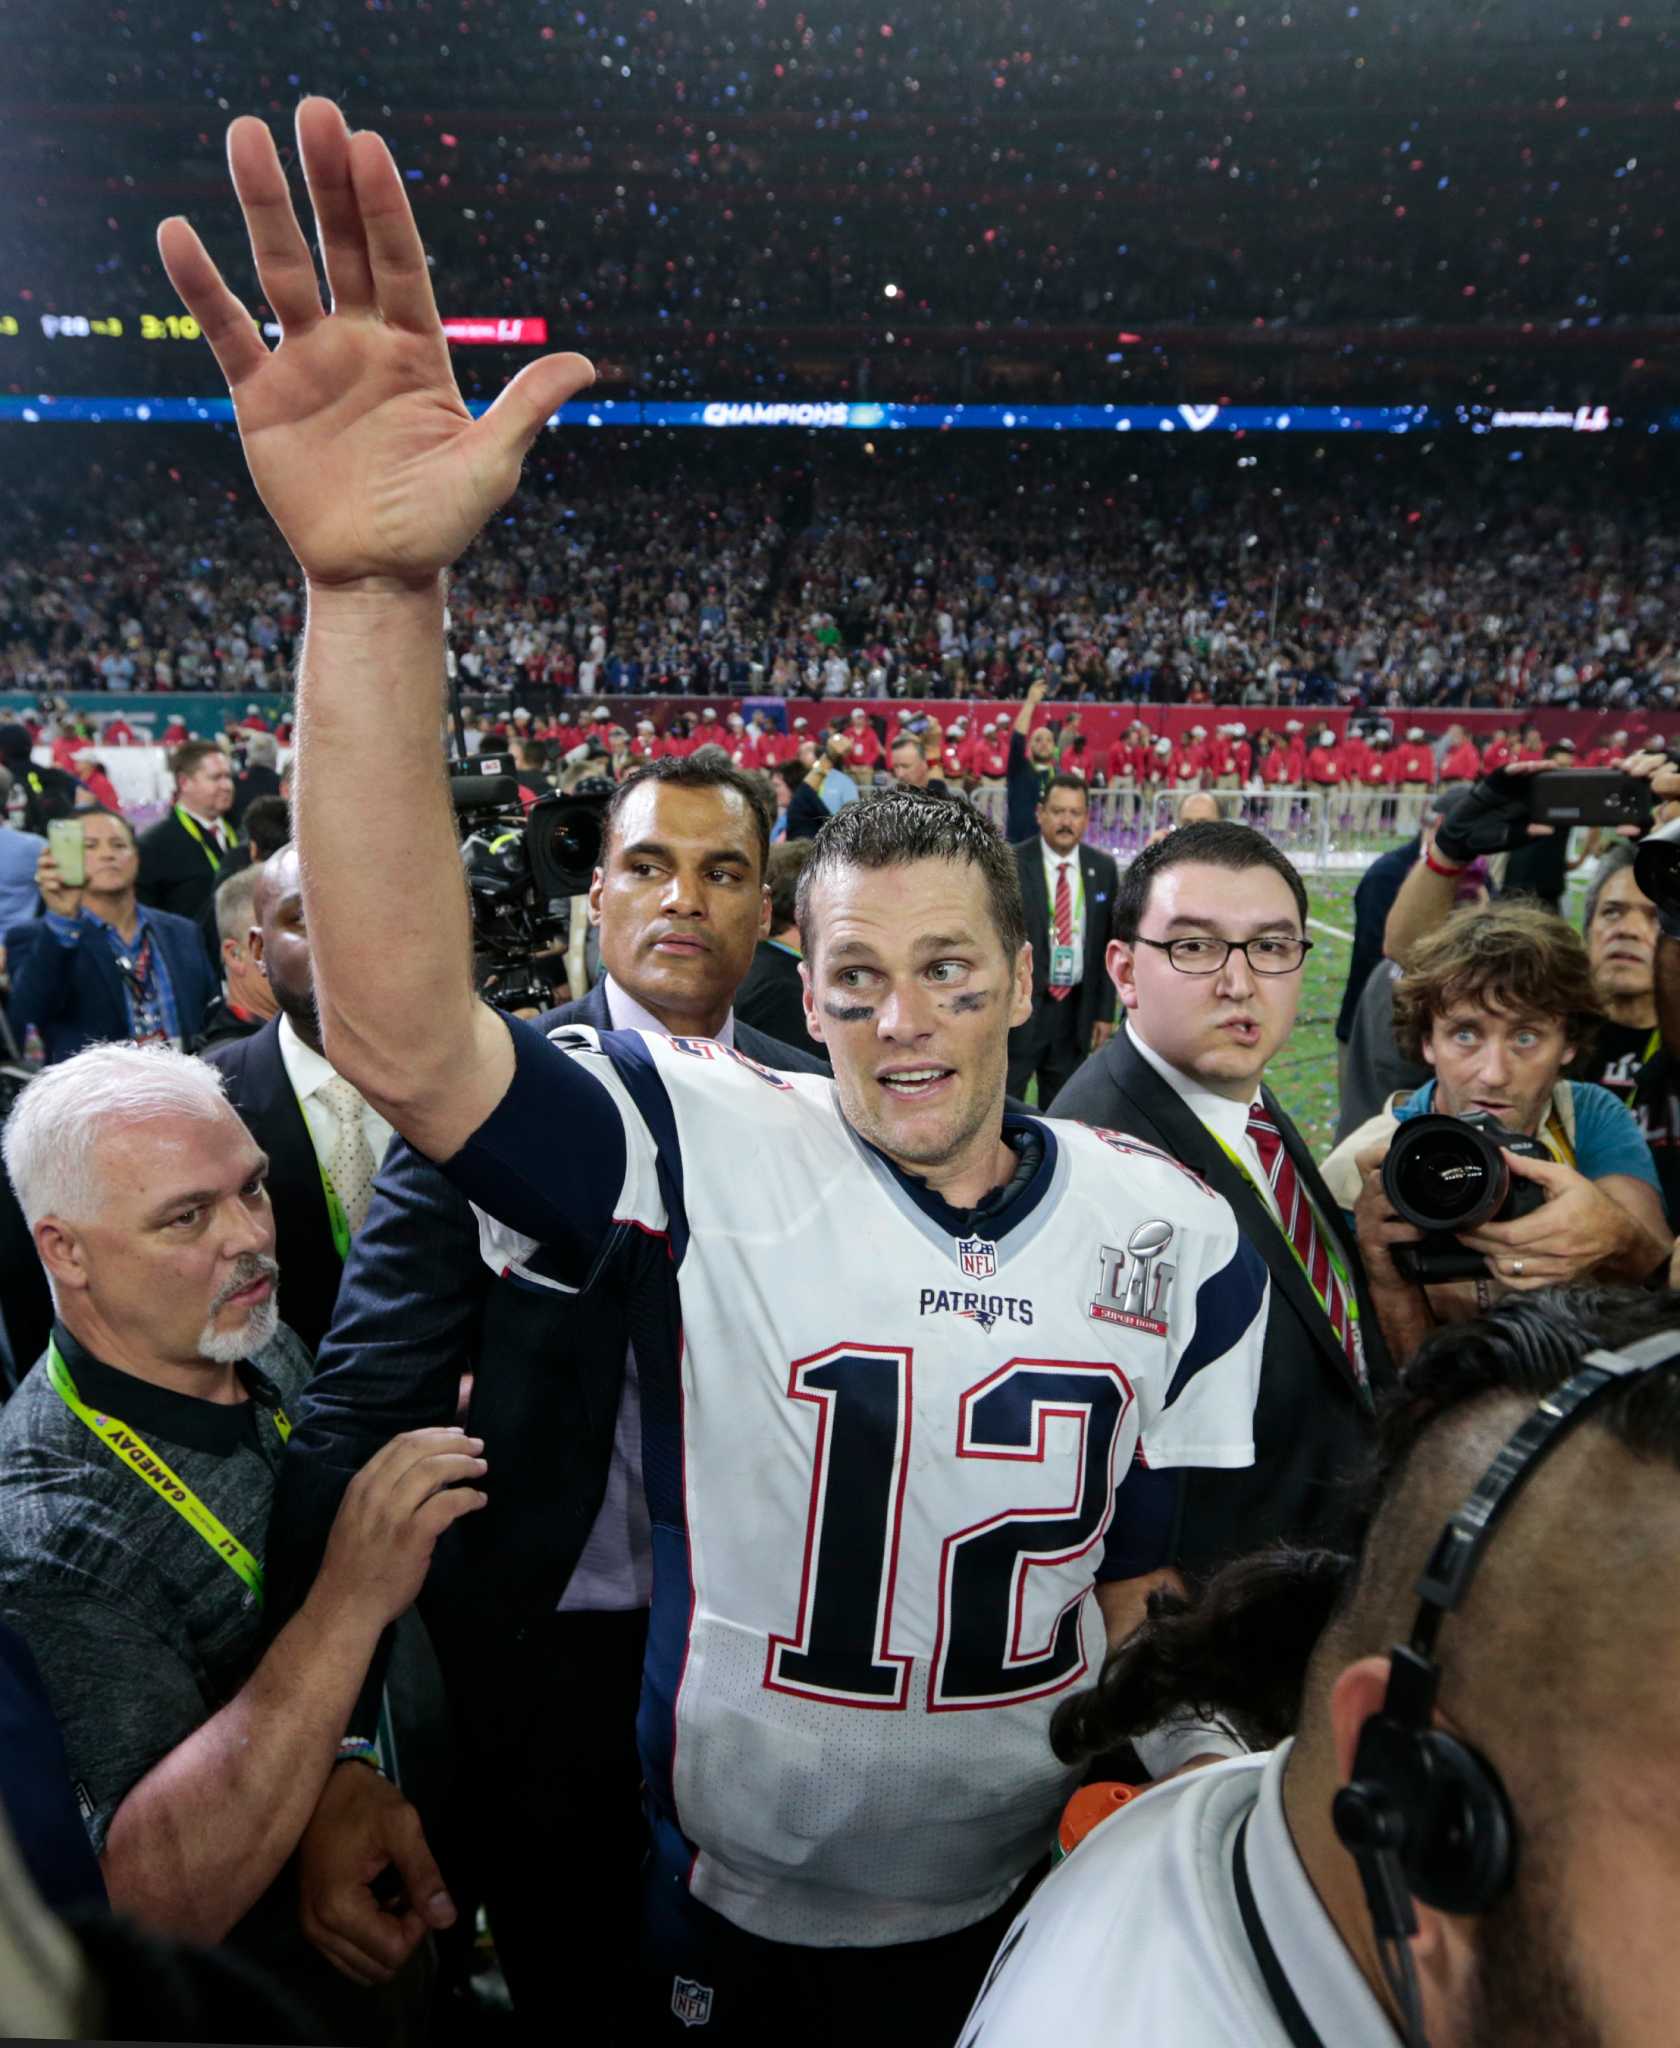 Tom Brady's Super Bowl jersey has been found after FBI help